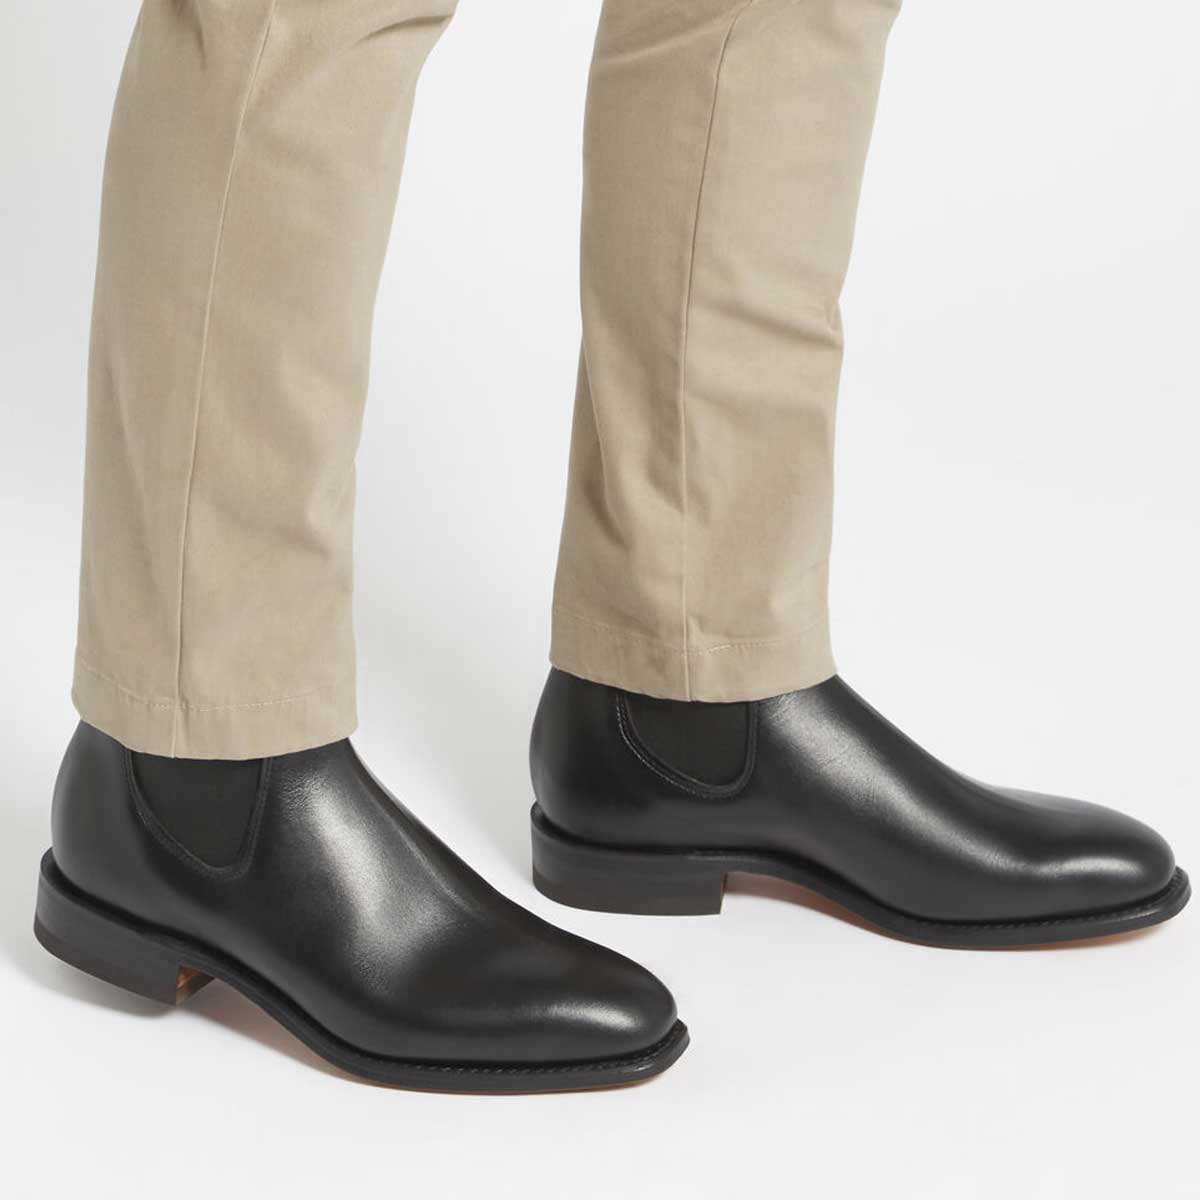 RM WILLIAMS Boots - Men's Comfort Craftsman - Black Rubber Sole